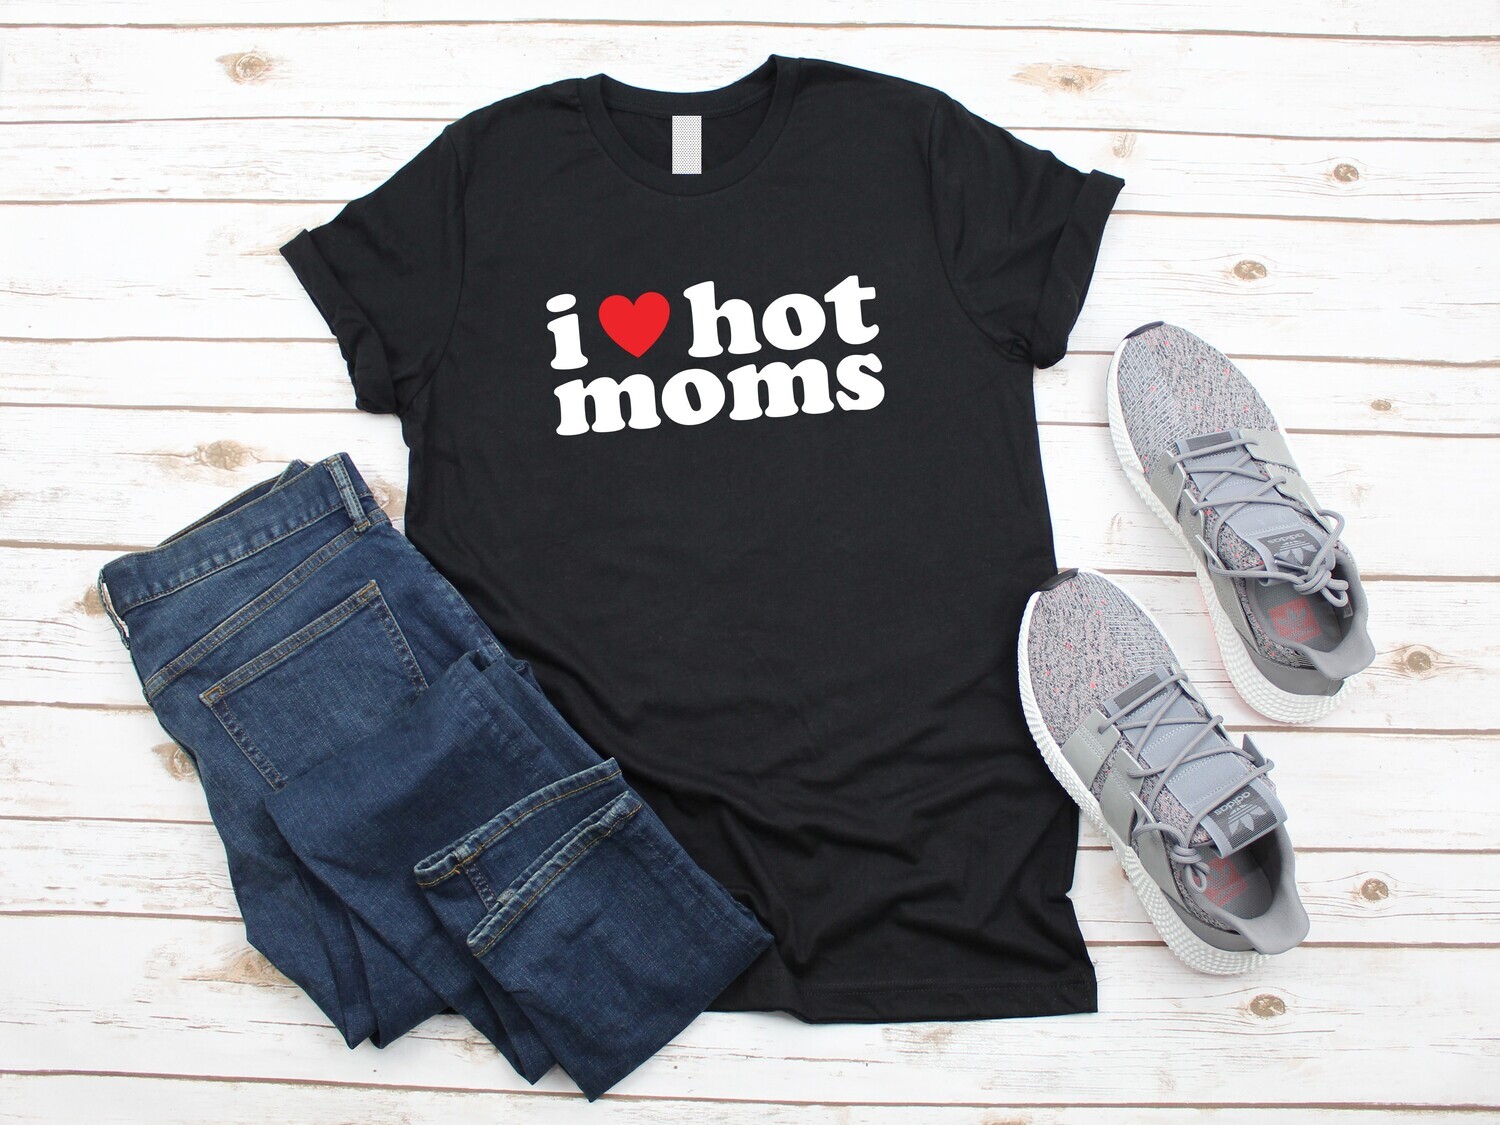 I love hot moms